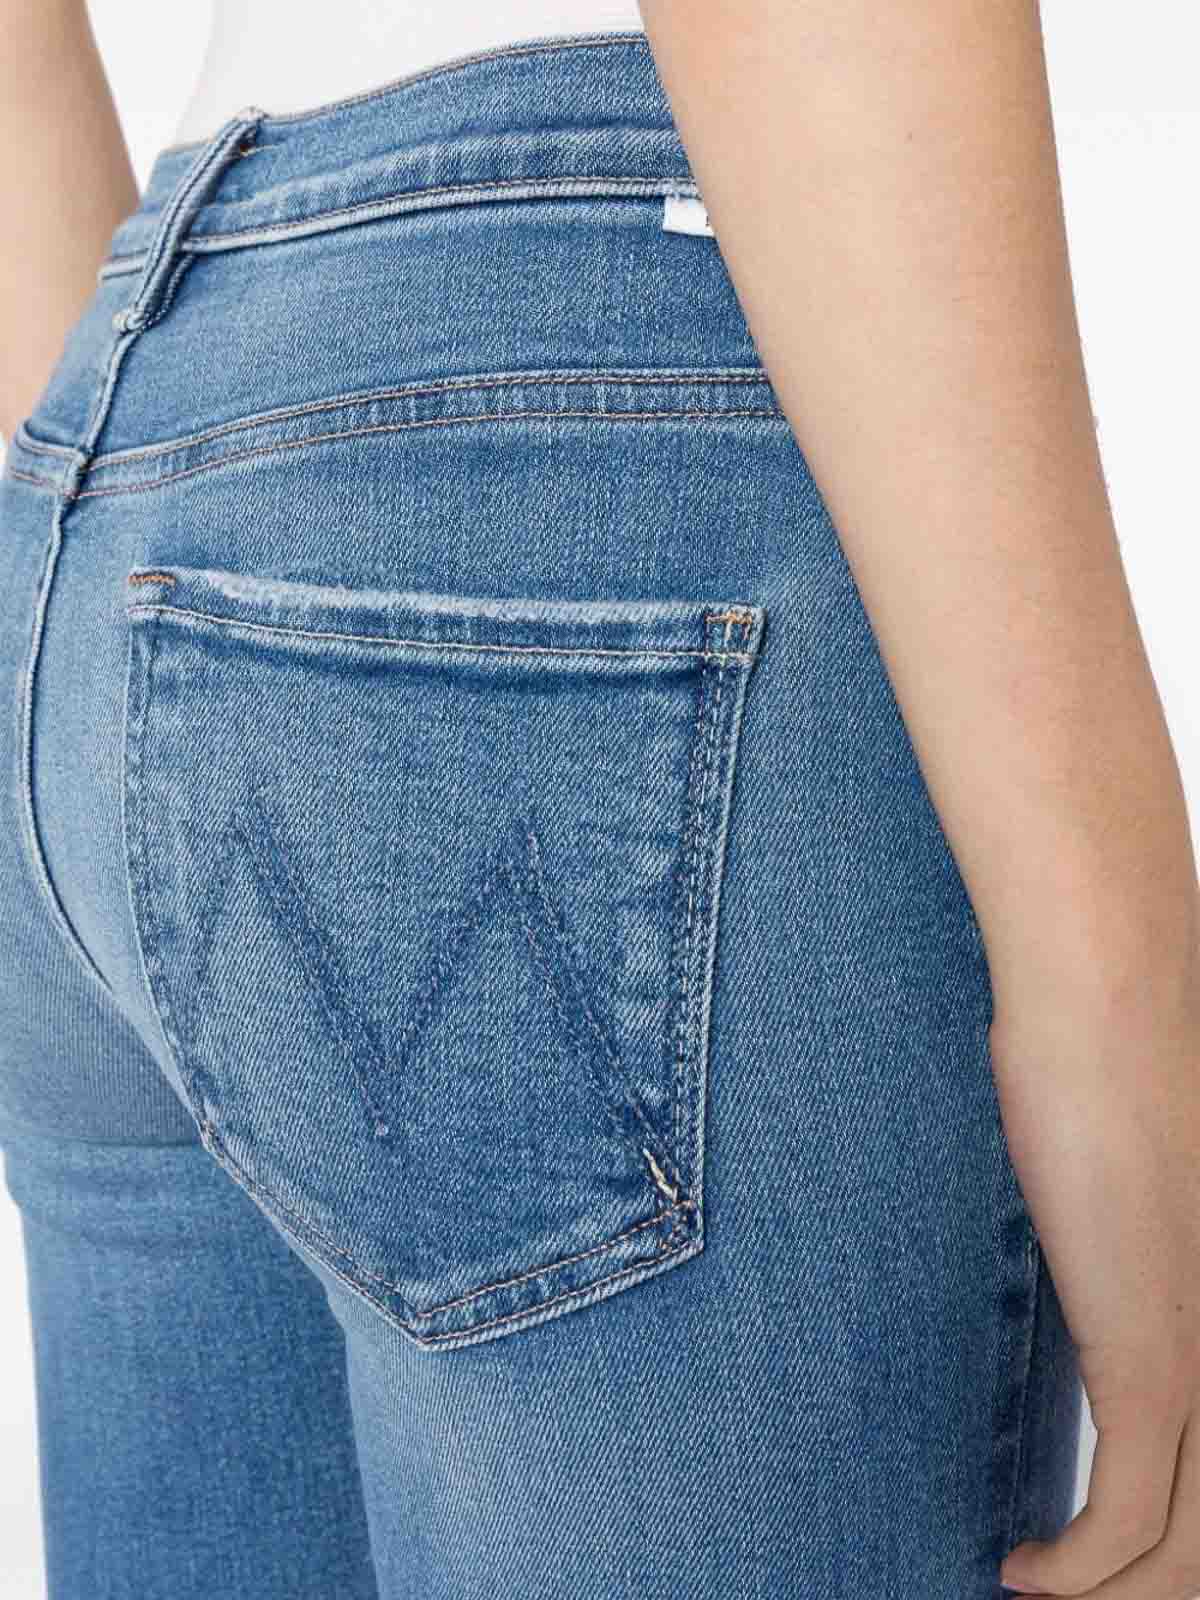 Shop Mother Denim Bootcut Jeans